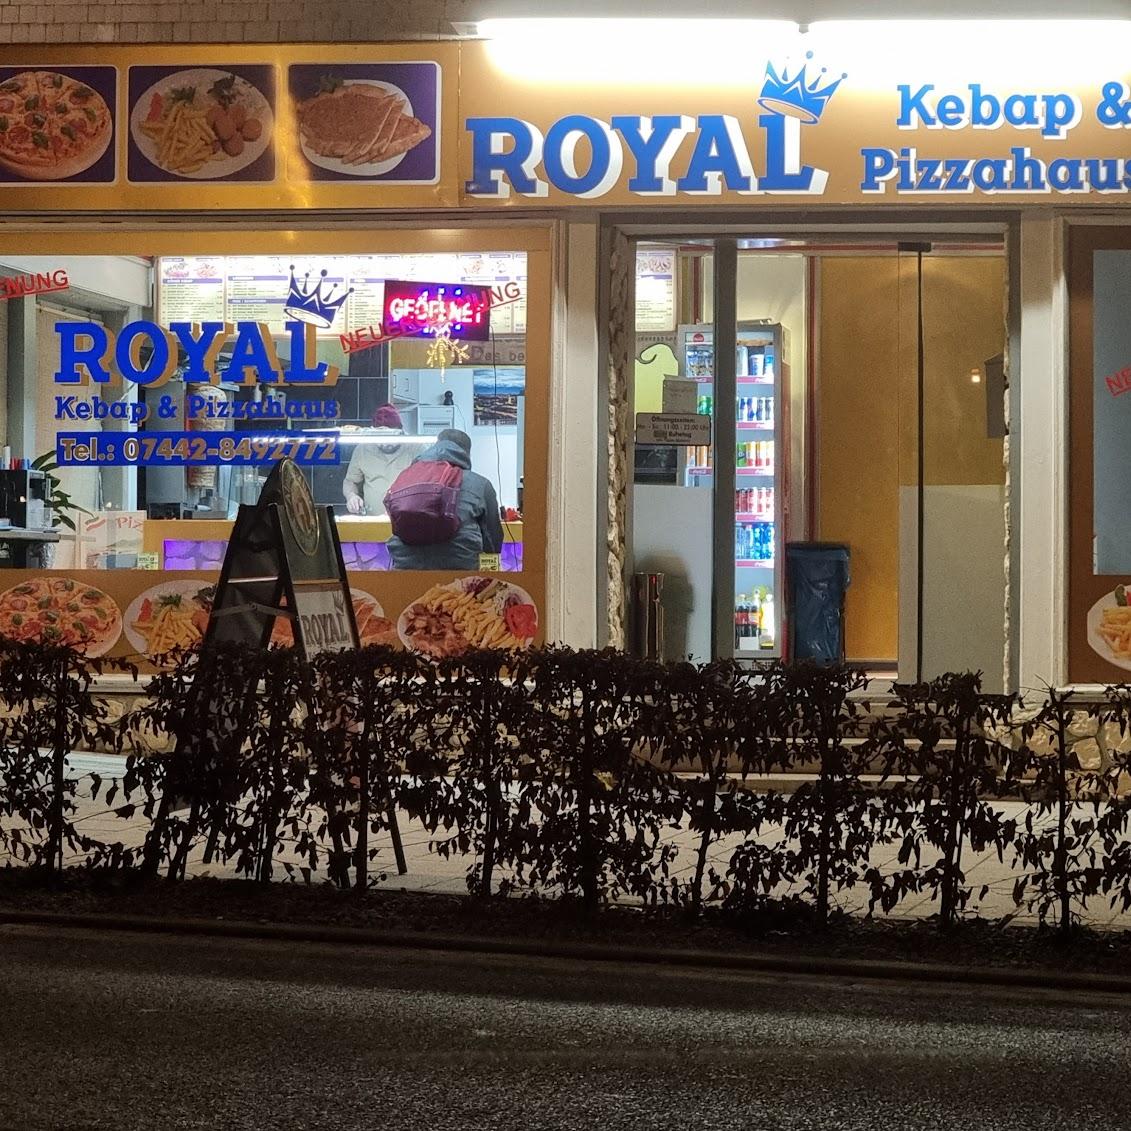 Restaurant "ROYAL Kebap & Pizza" in Baiersbronn